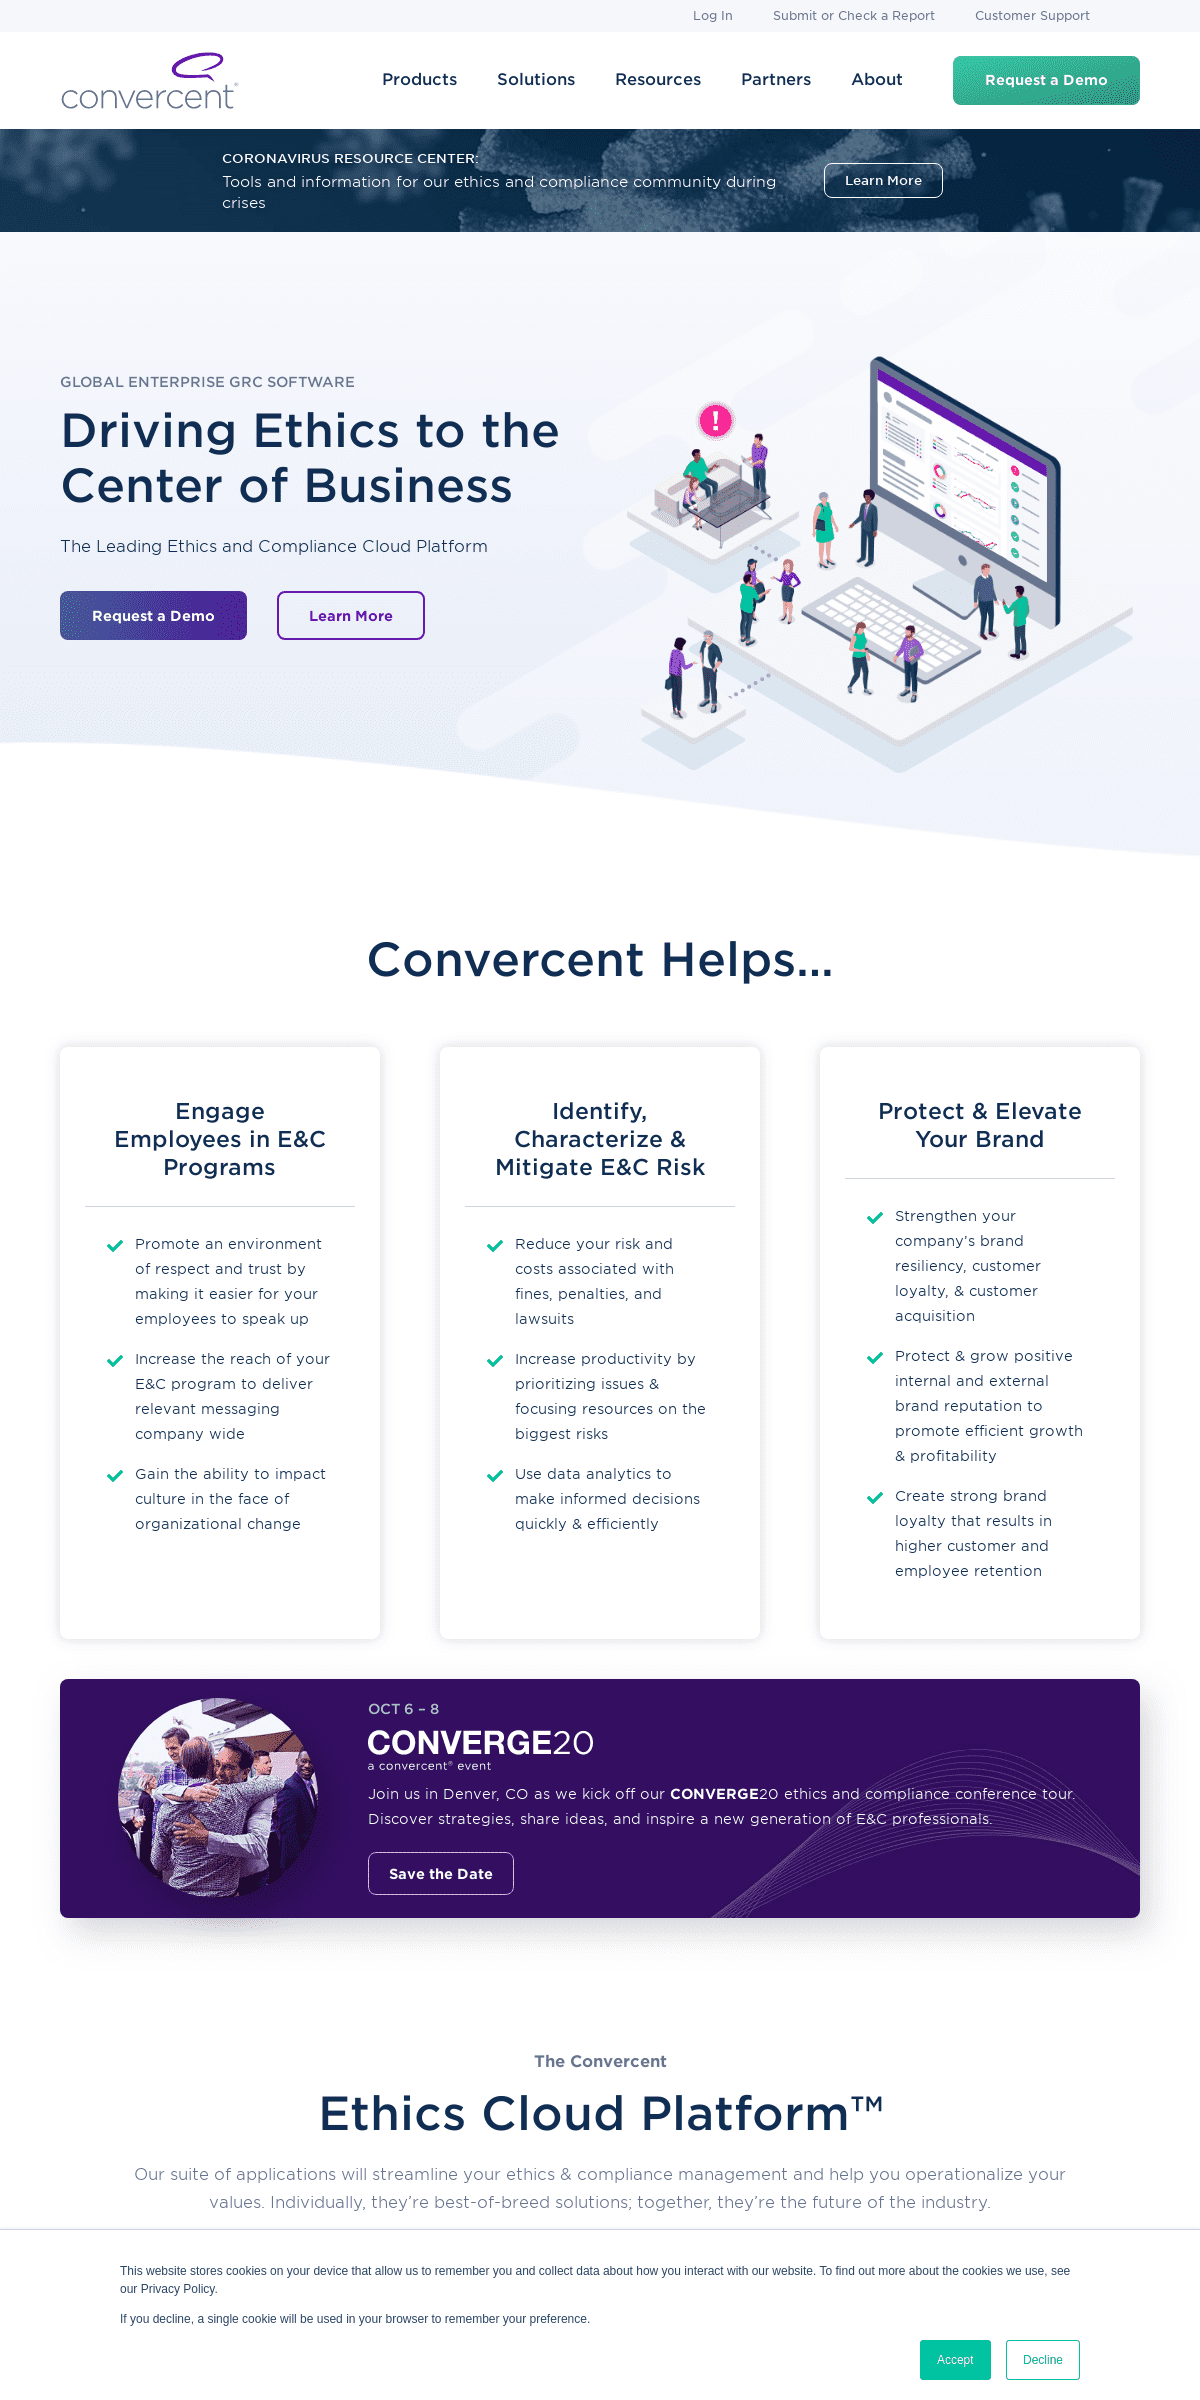 A complete backup of convercent.com